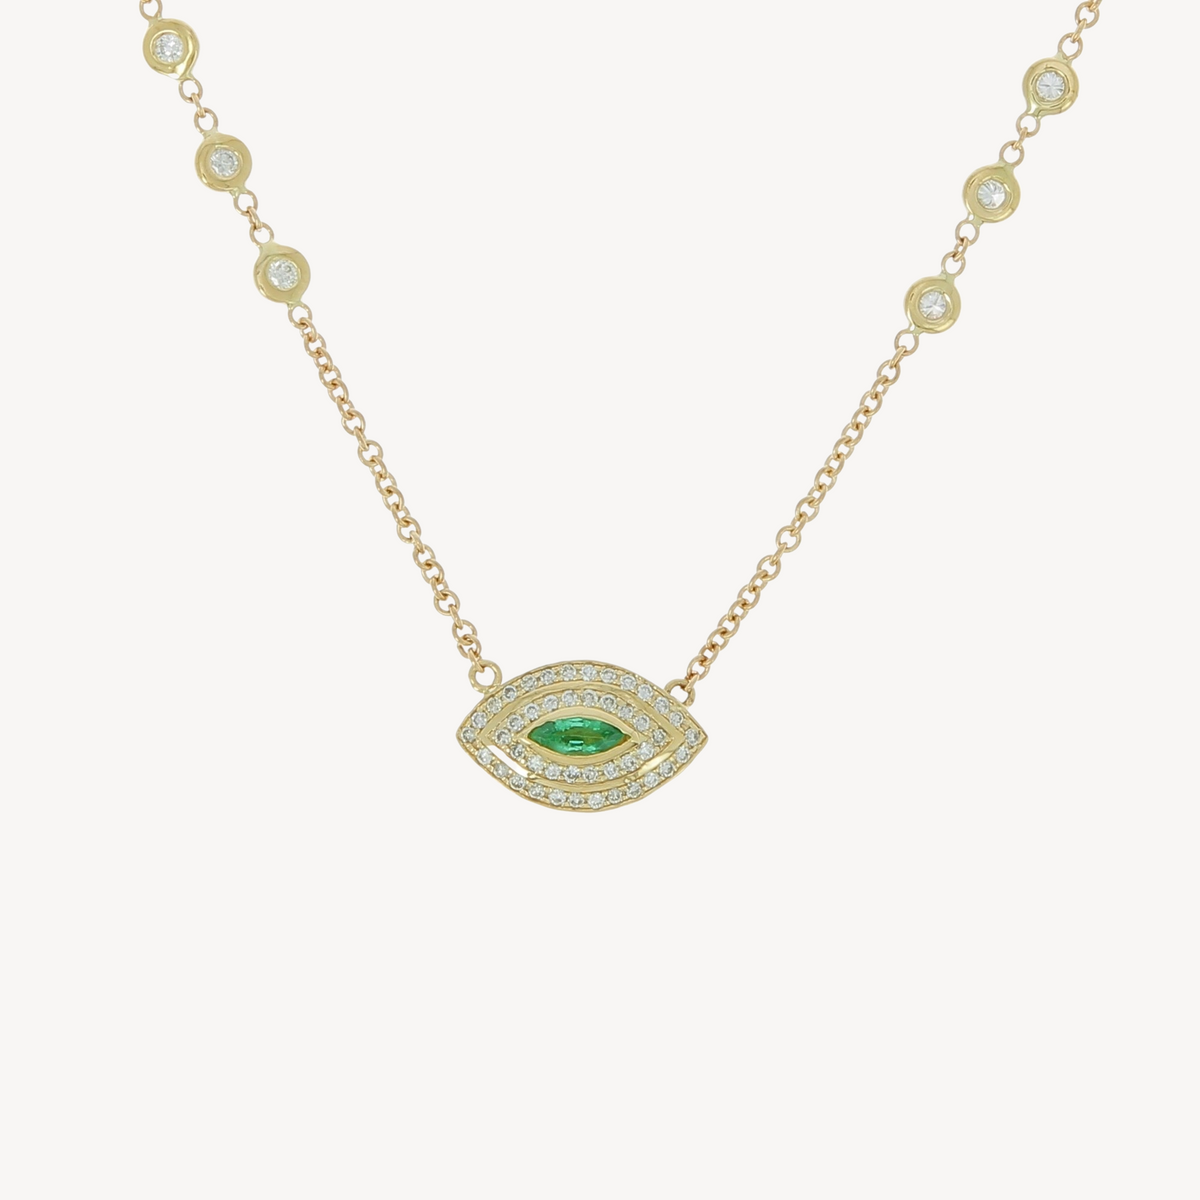 Emerald center halo eye necklace